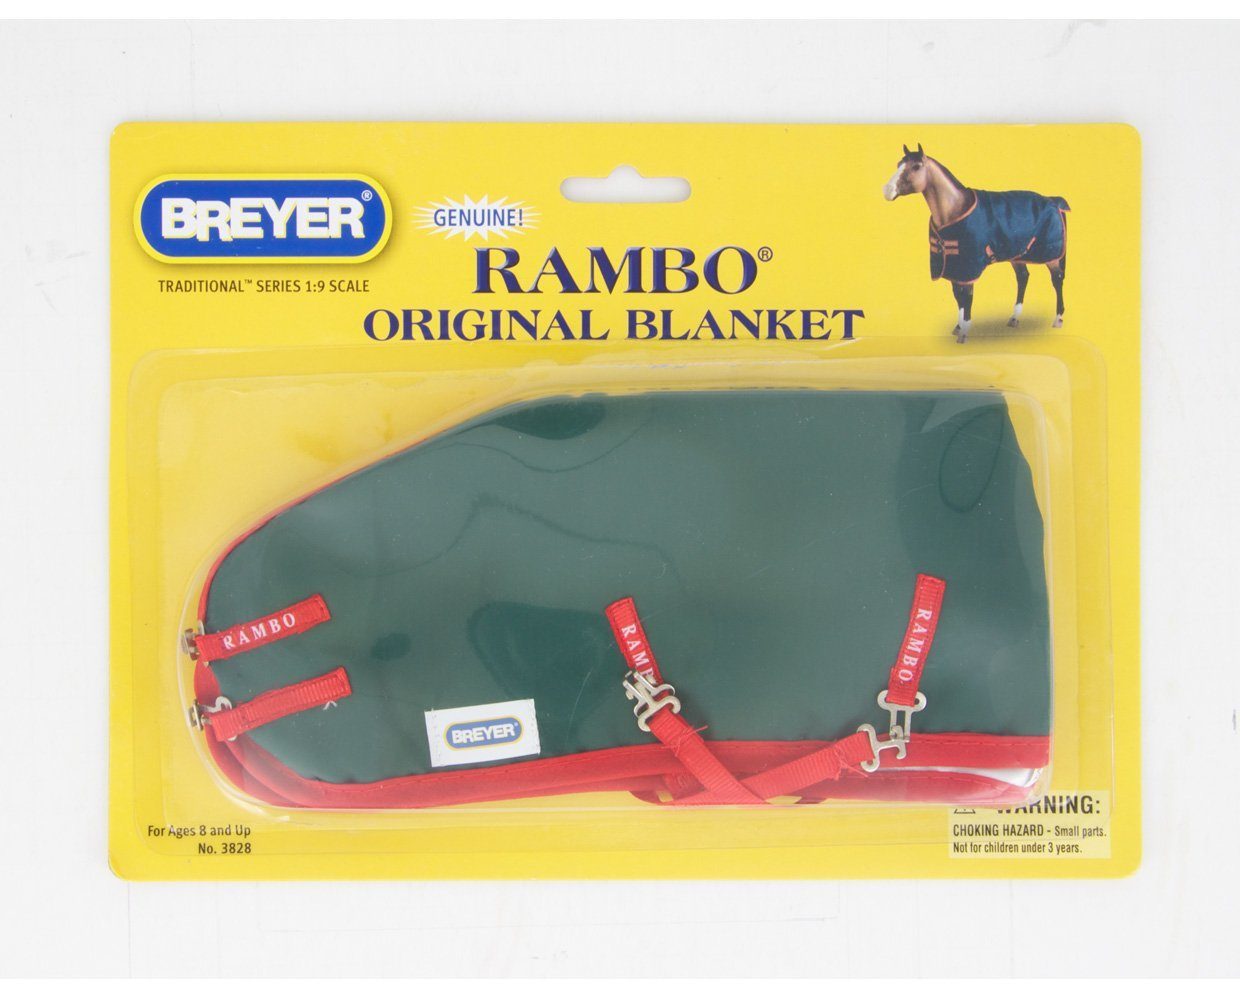 Breyer Rambo Blanket